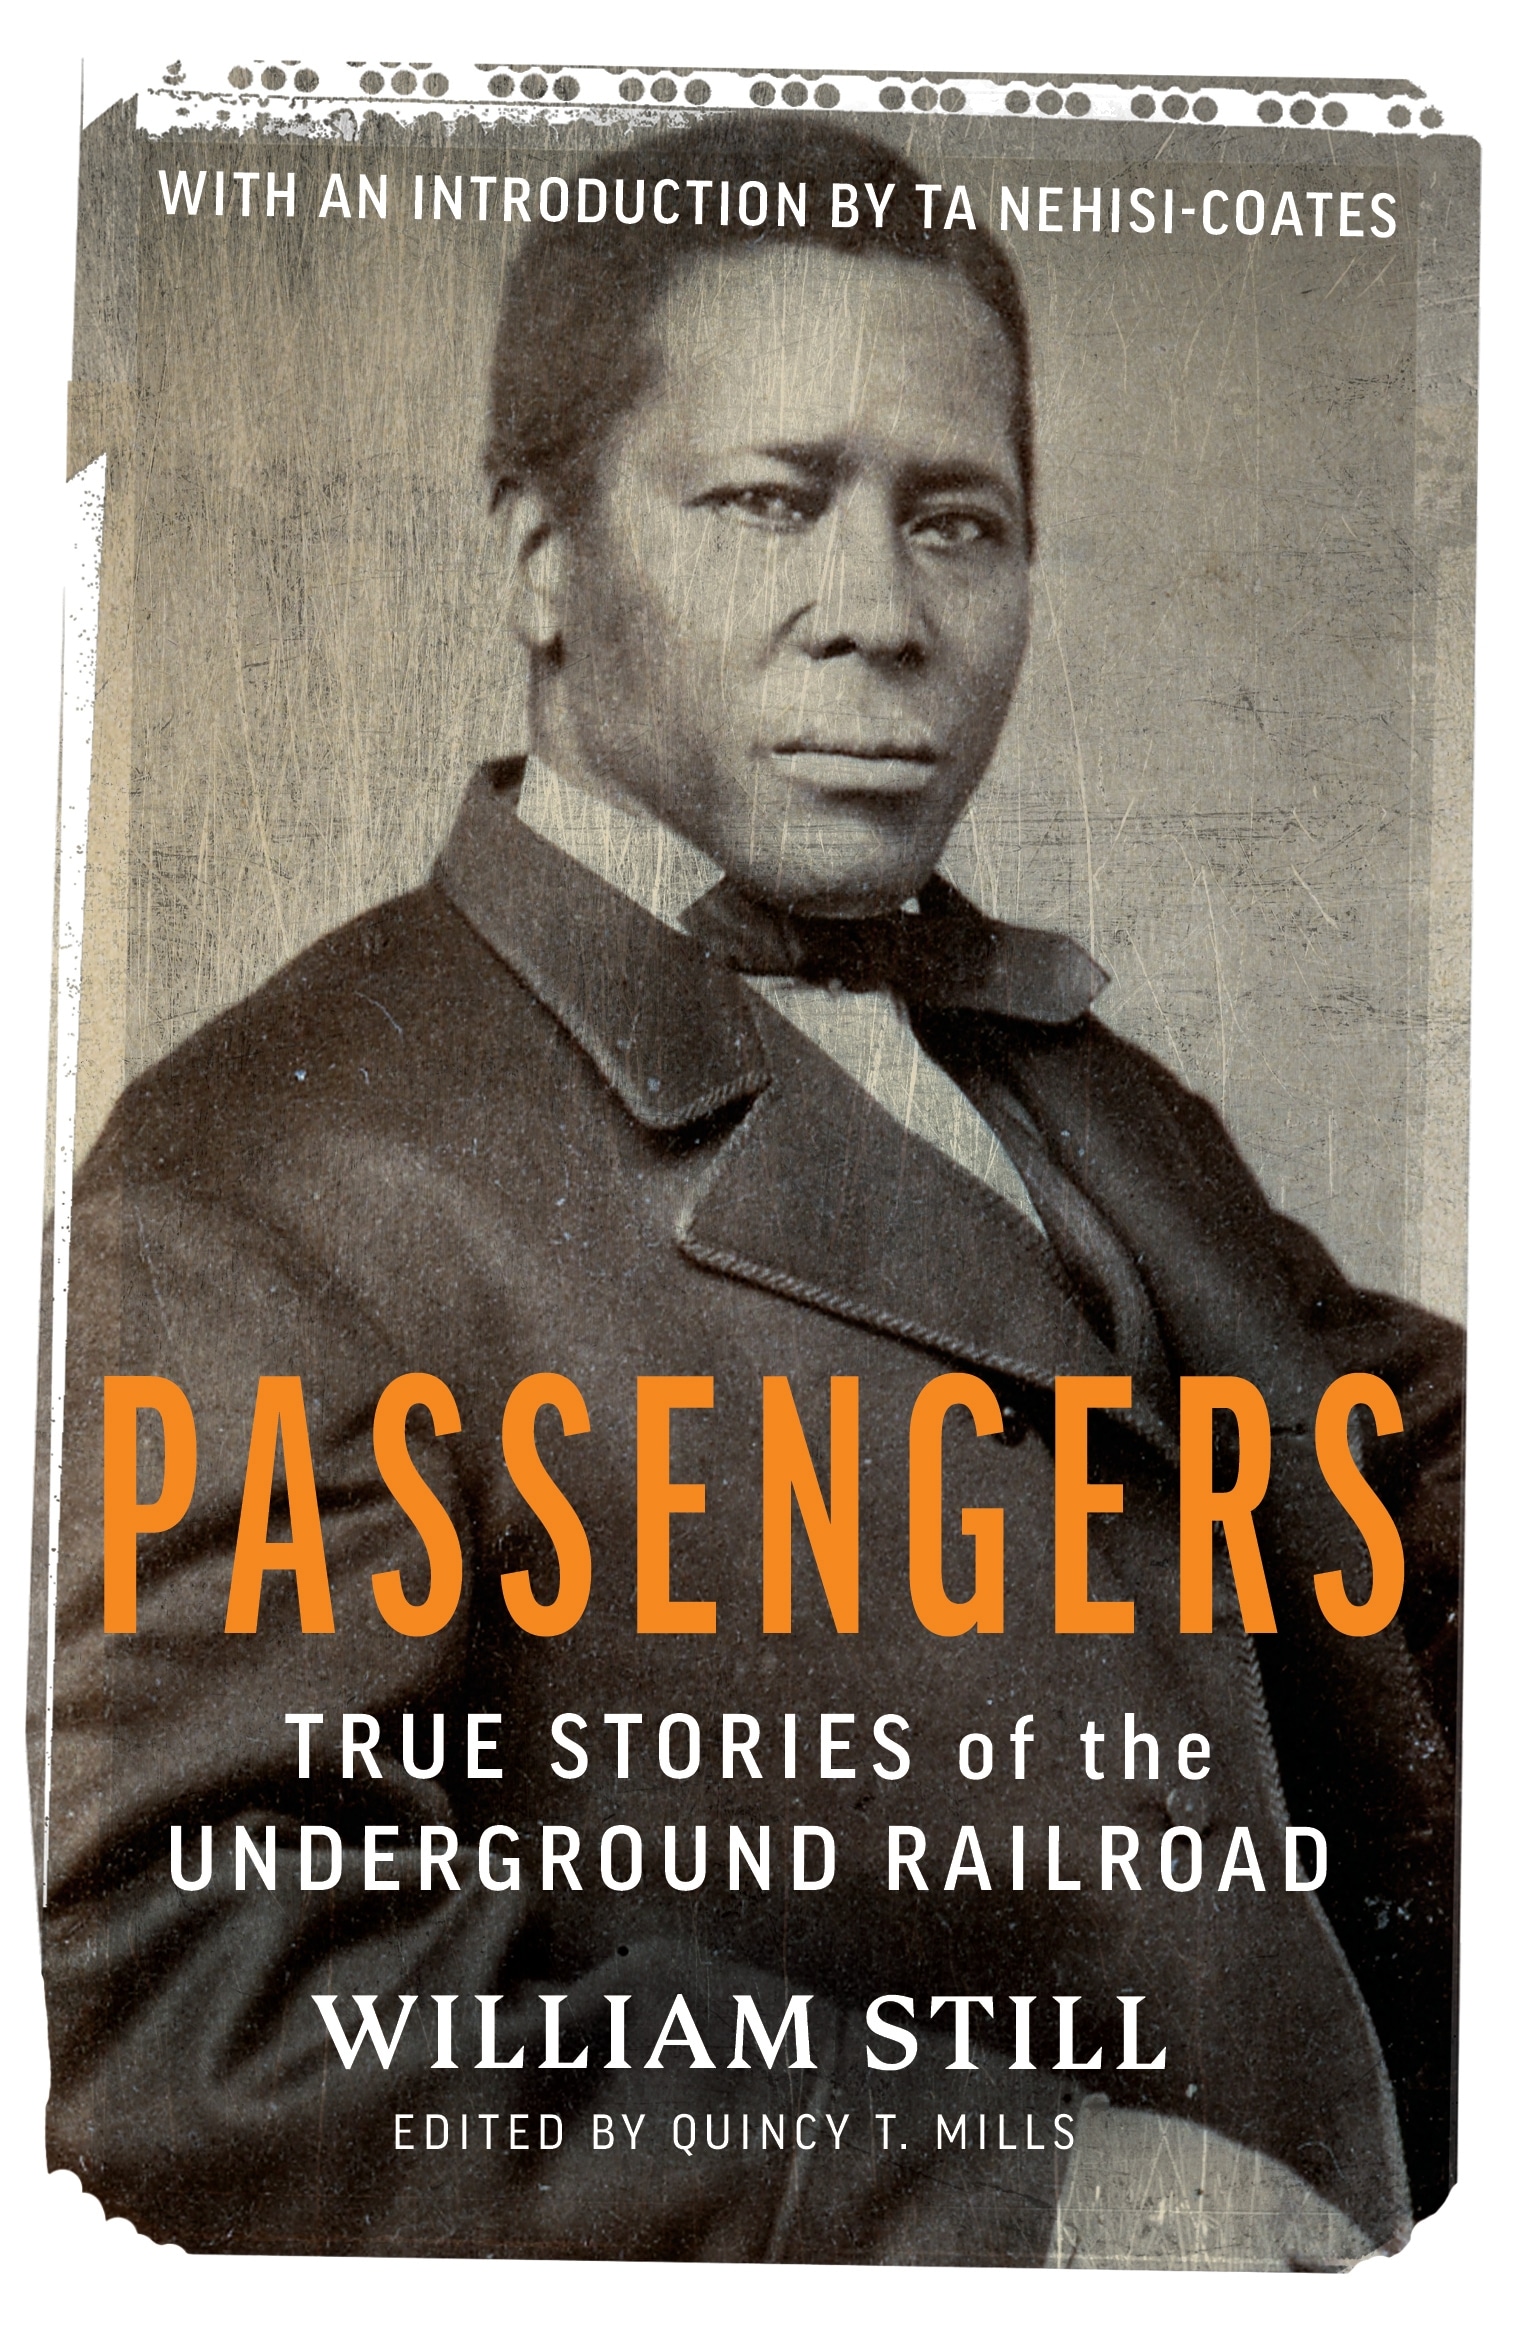 Book “Passengers” by William Still, Ta-Nehisi Coates — October 1, 2020